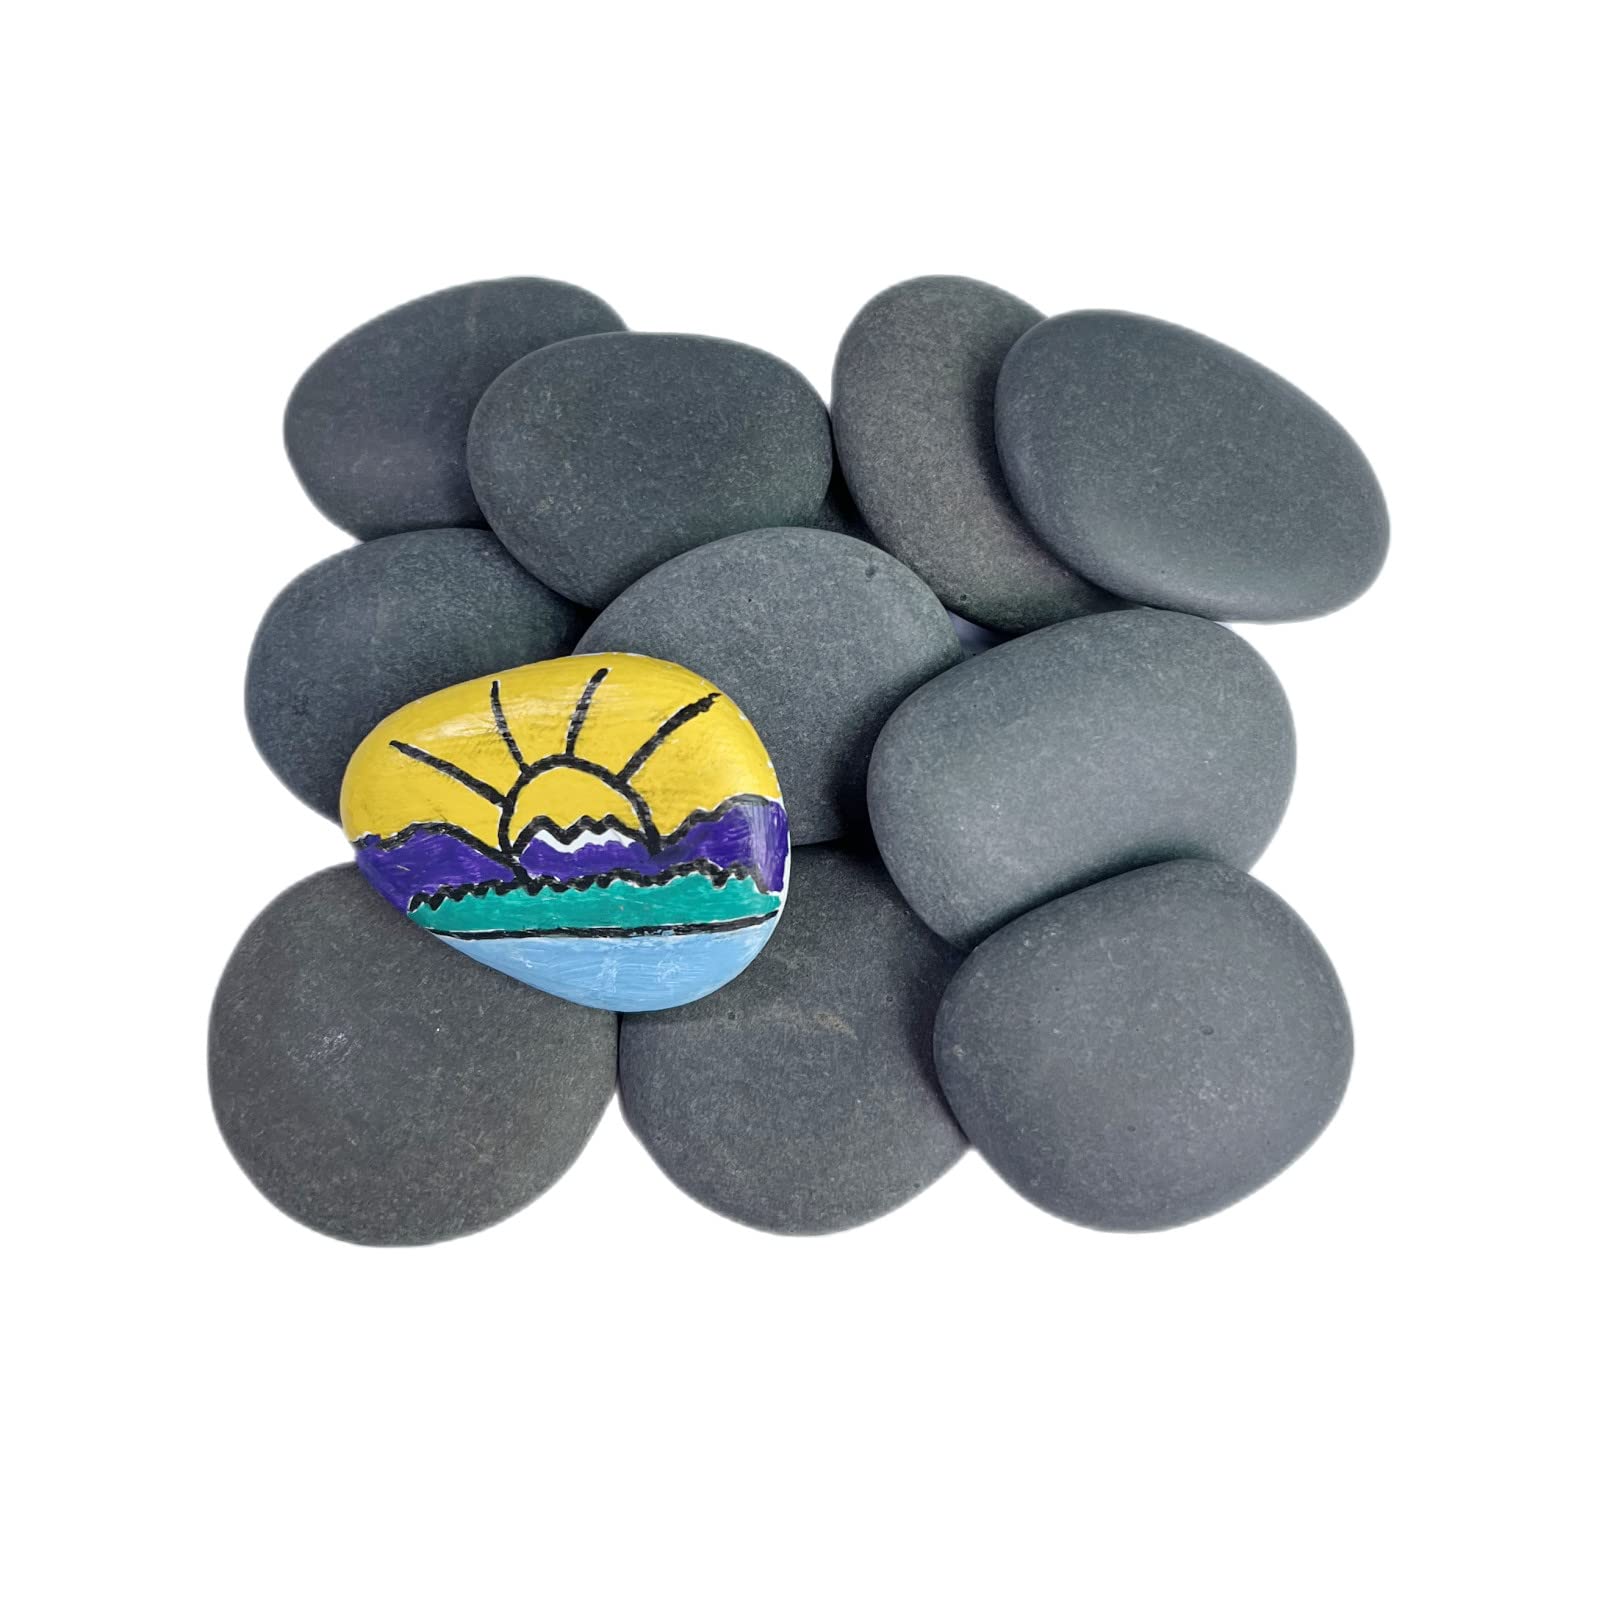 Lifetop 100 PCS Painting Rocks Bulk, Natural River DIY Rocks Flat & Smooth  Kindness Rocks for Arts, Crafts, Decoration, Small Rocks for